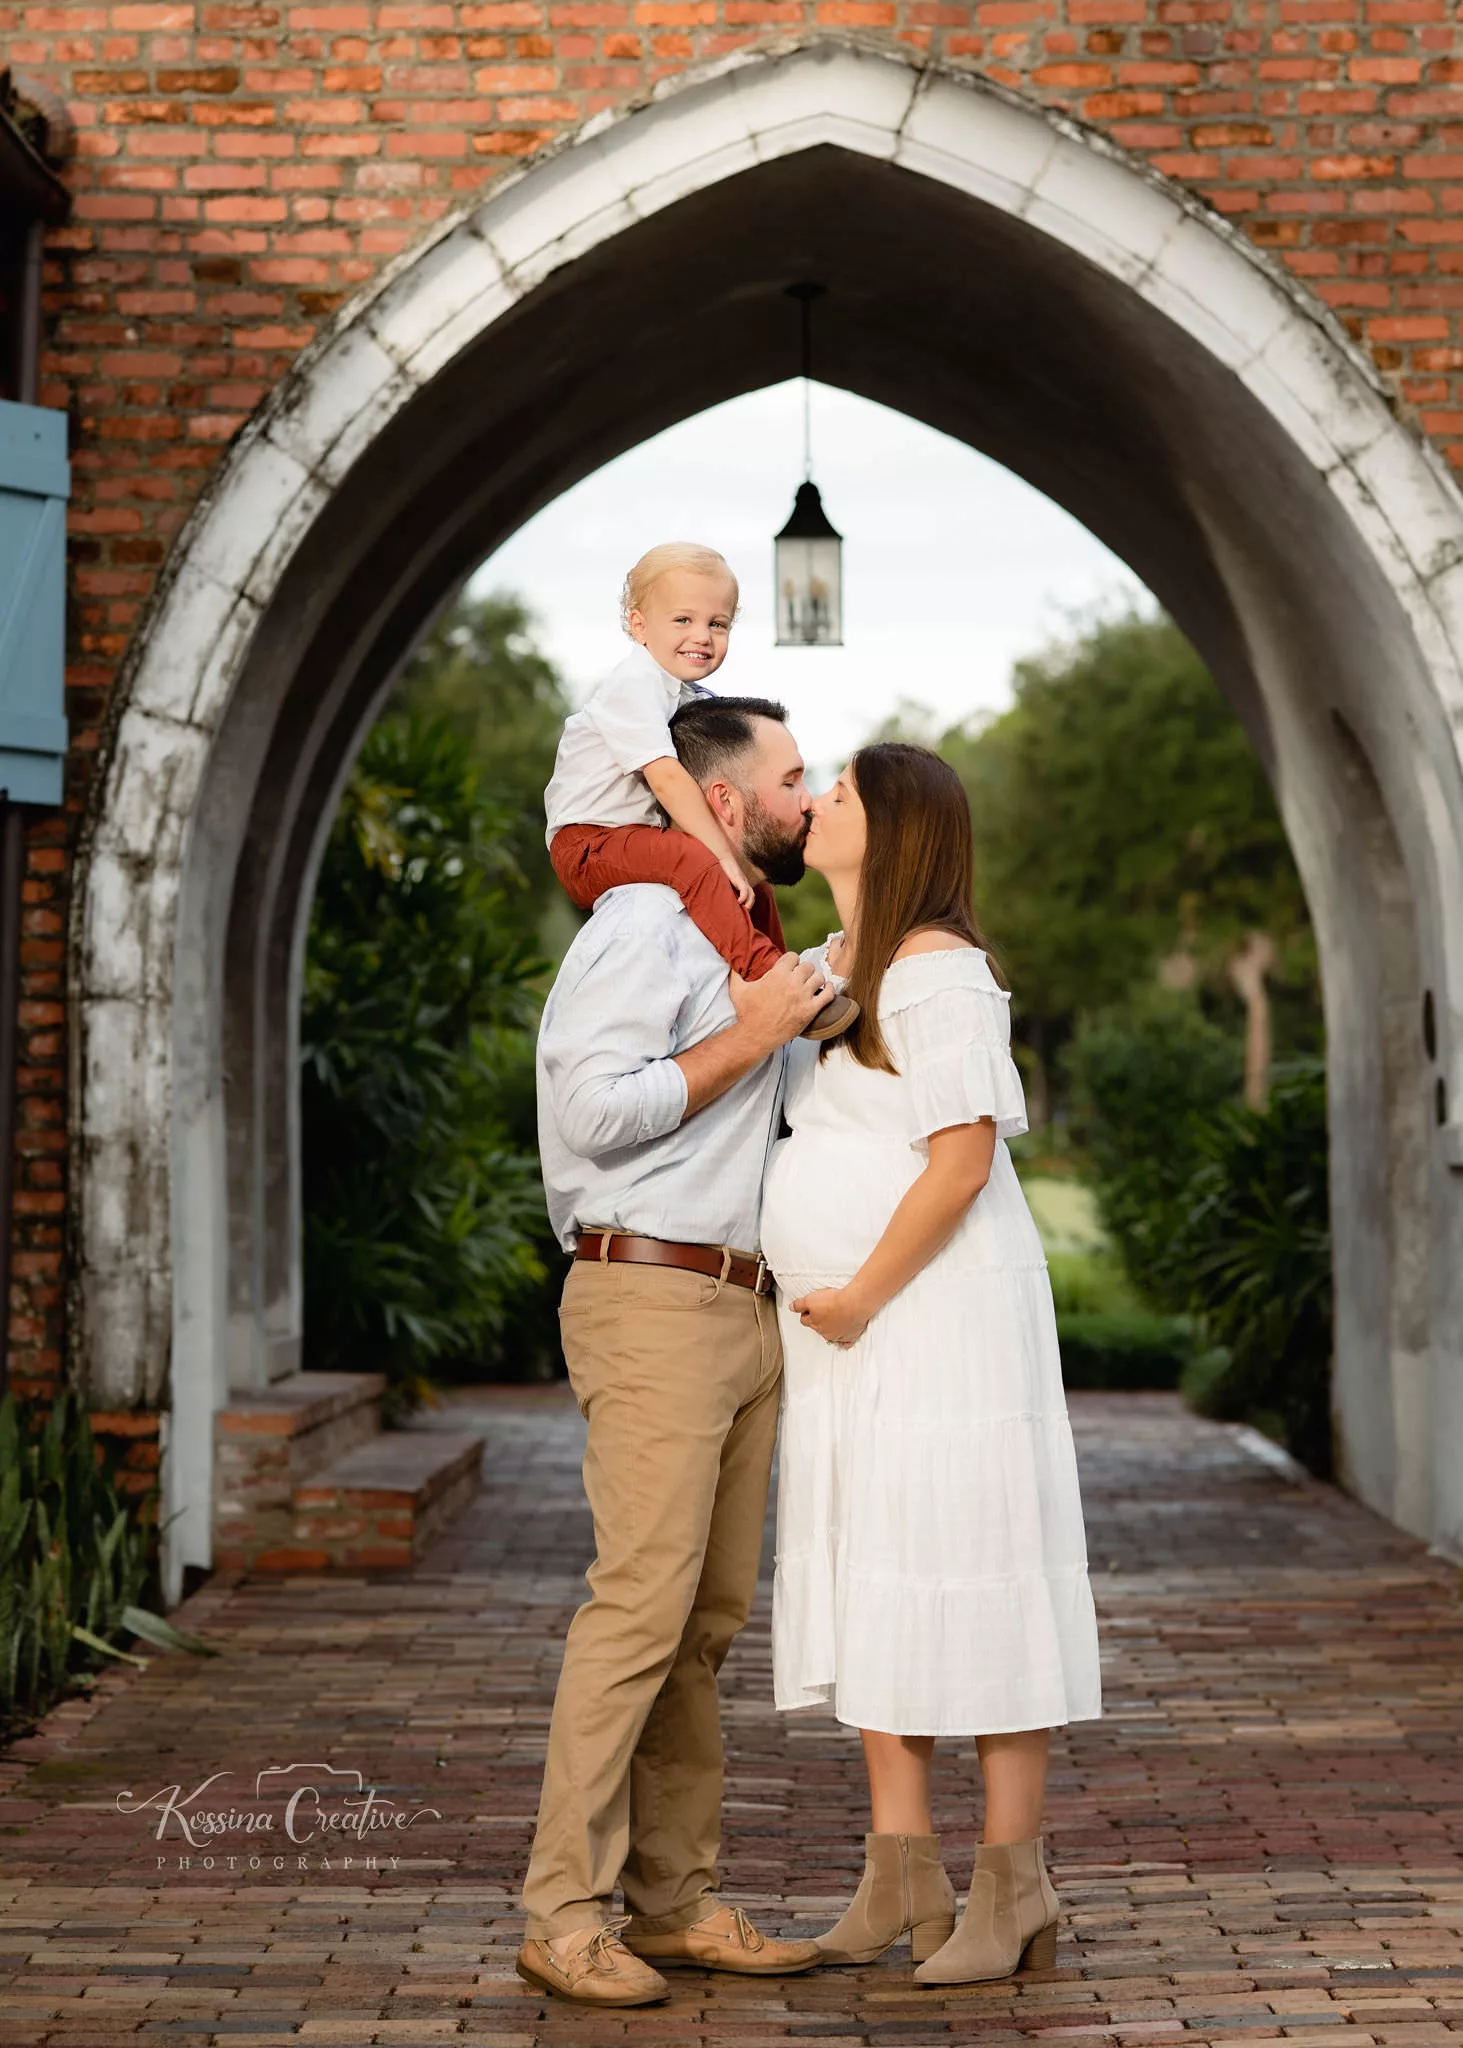 Orlando Family photography maternity family photo at church with white dress